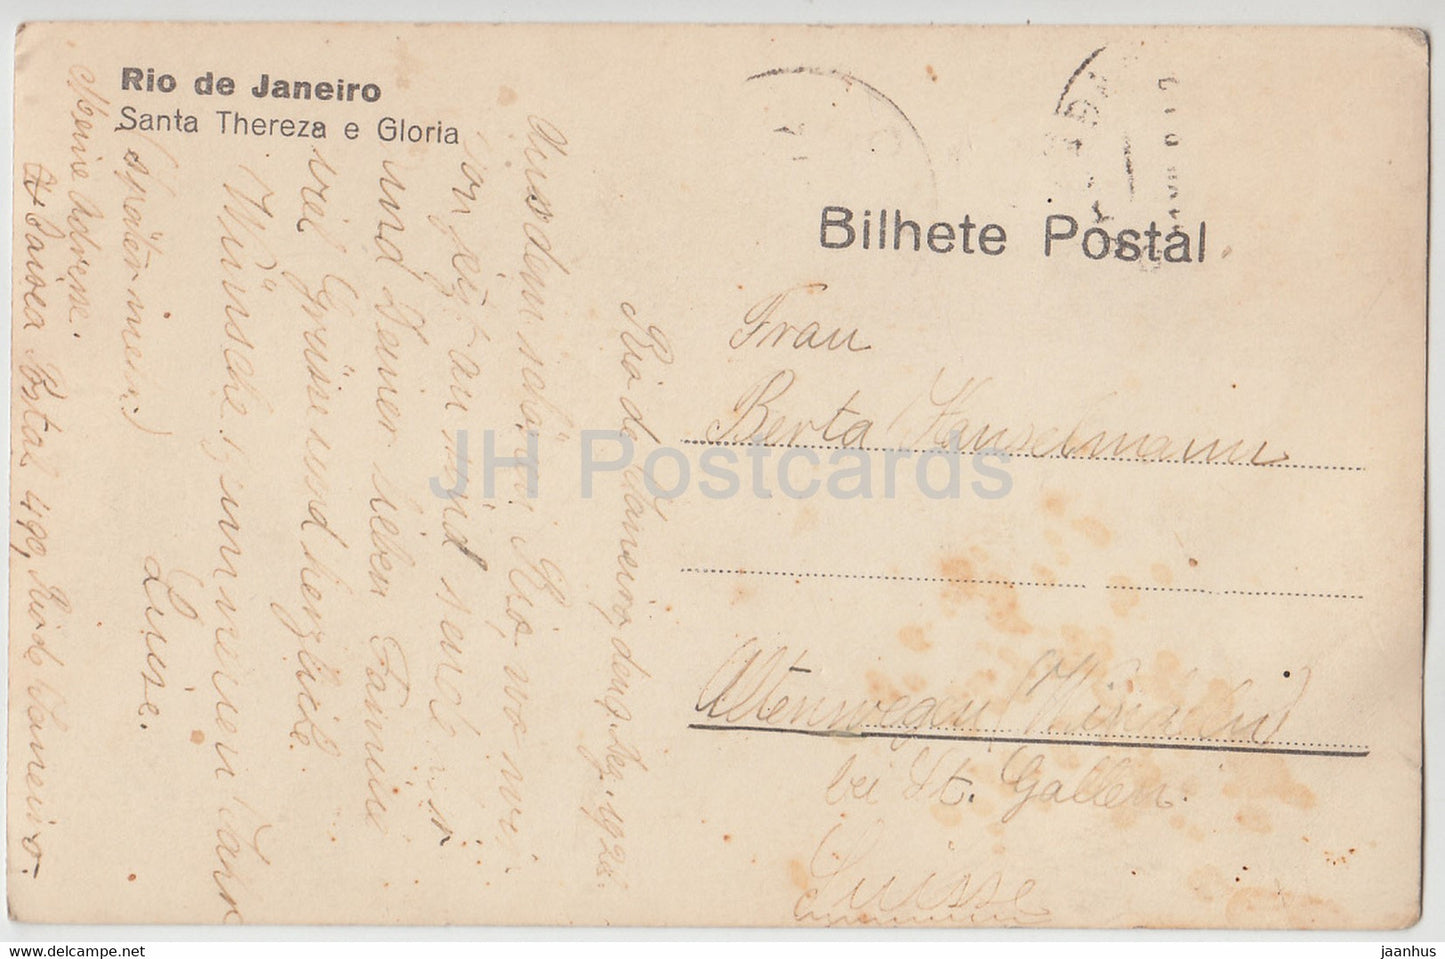 Rio de Janeiro - Santa Thereza e Gloria - carte postale ancienne - 1928 - Brésil - utilisé